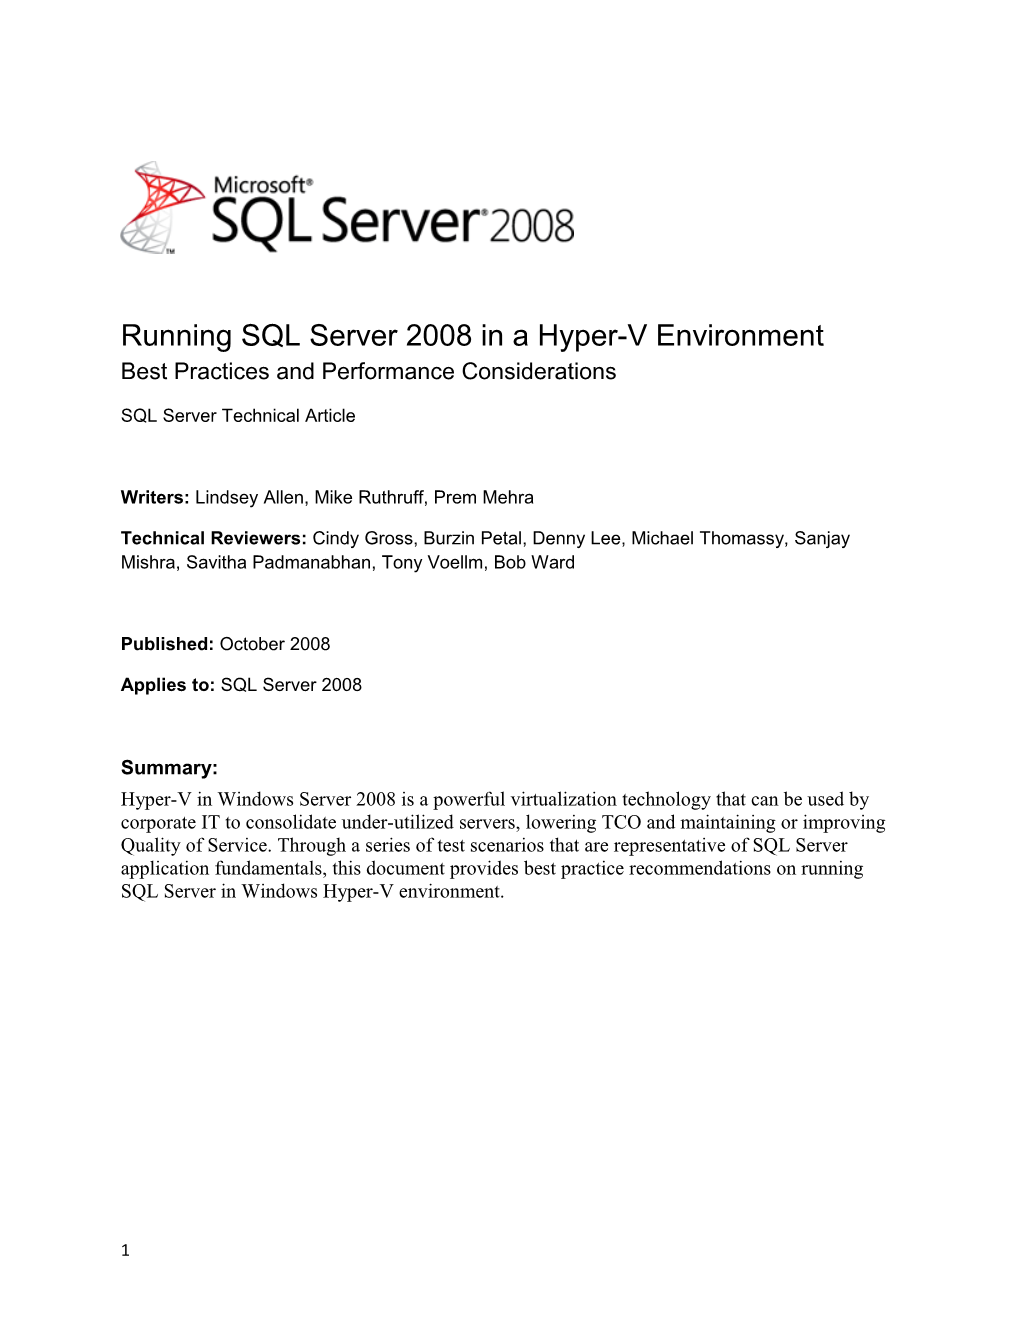 Running SQL Server 2008 in Hyper-V Environment